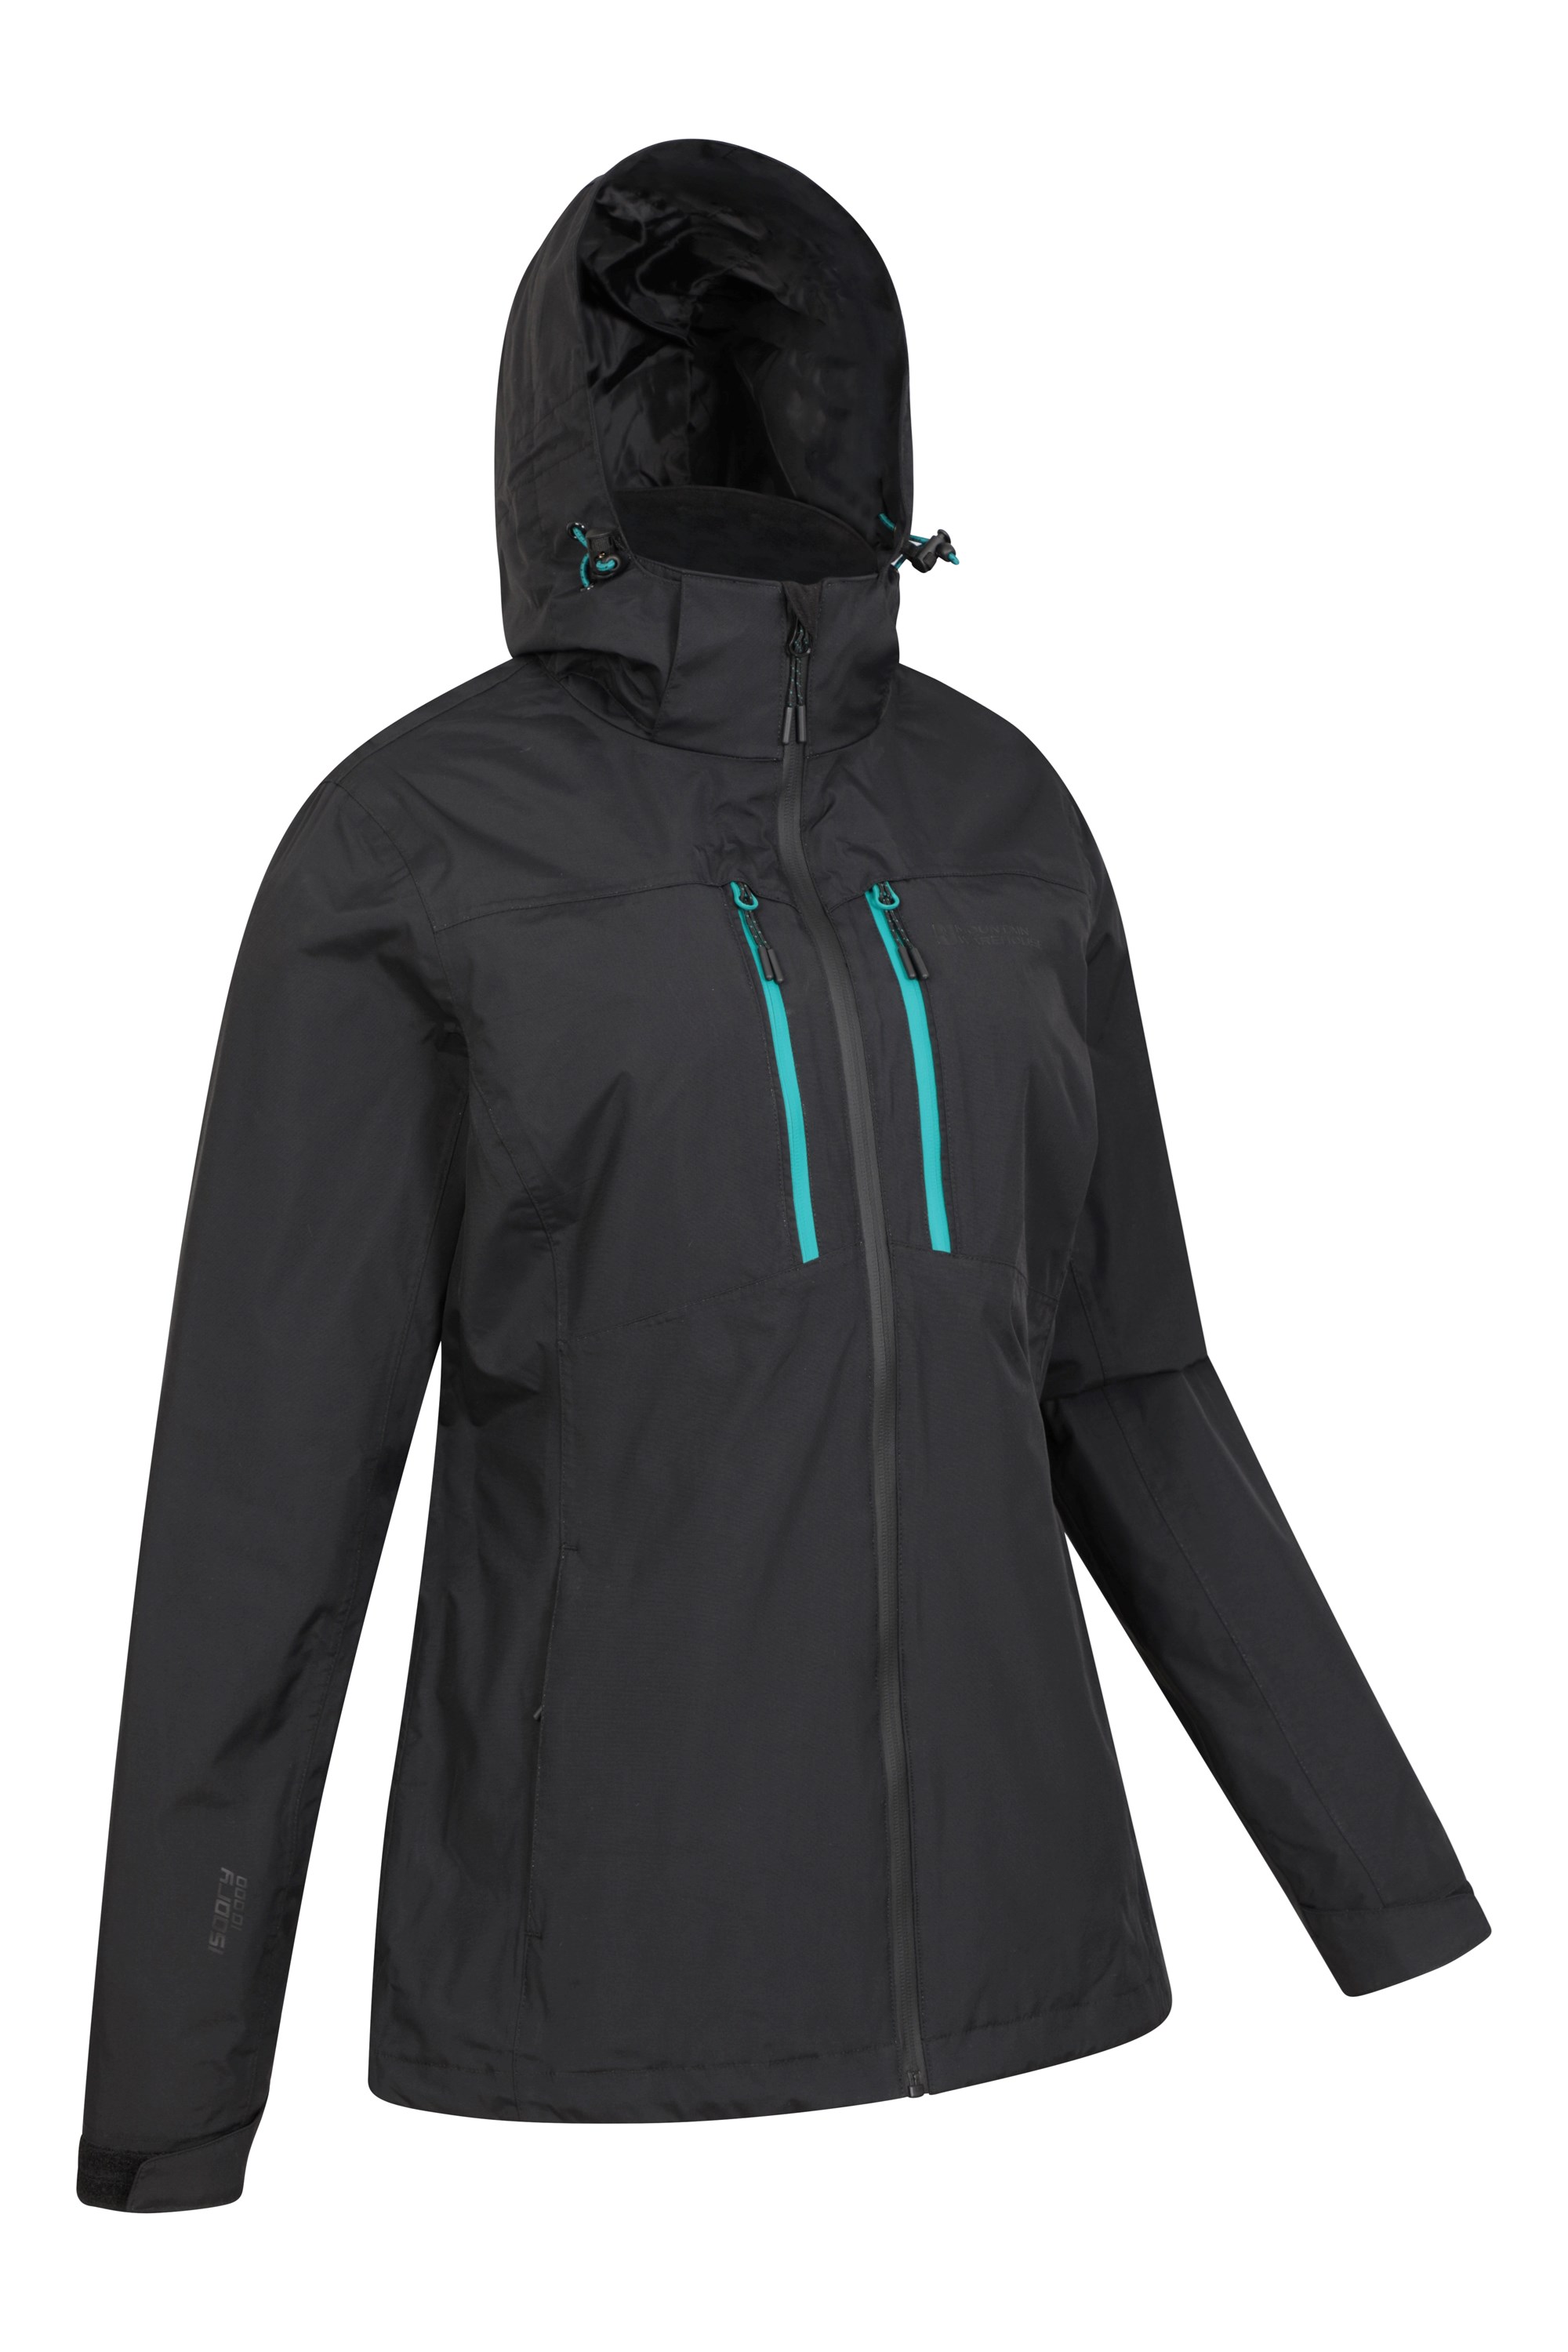 Mountain Warehouse Rainforest Waterproof Womens Jacket Get the best ...